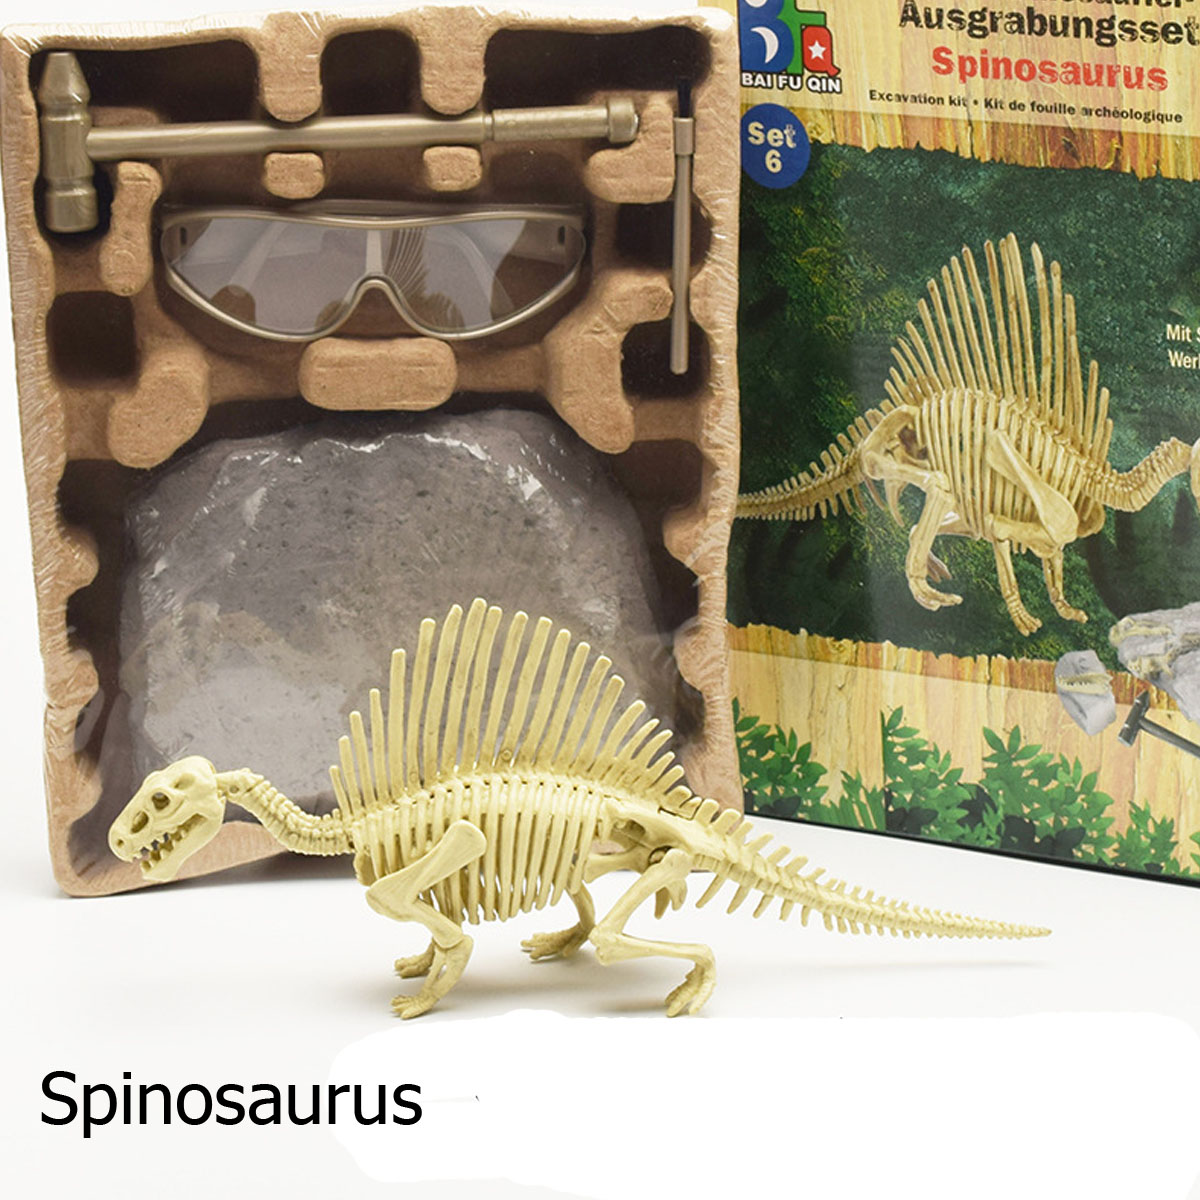 DIY-Dinosaur-Fossil-Diecast-Modell-Toy-Kit-Vice-Saurolophus-Styracosaurus-Diplodocus-Ceratosaurus-Sp-1428184